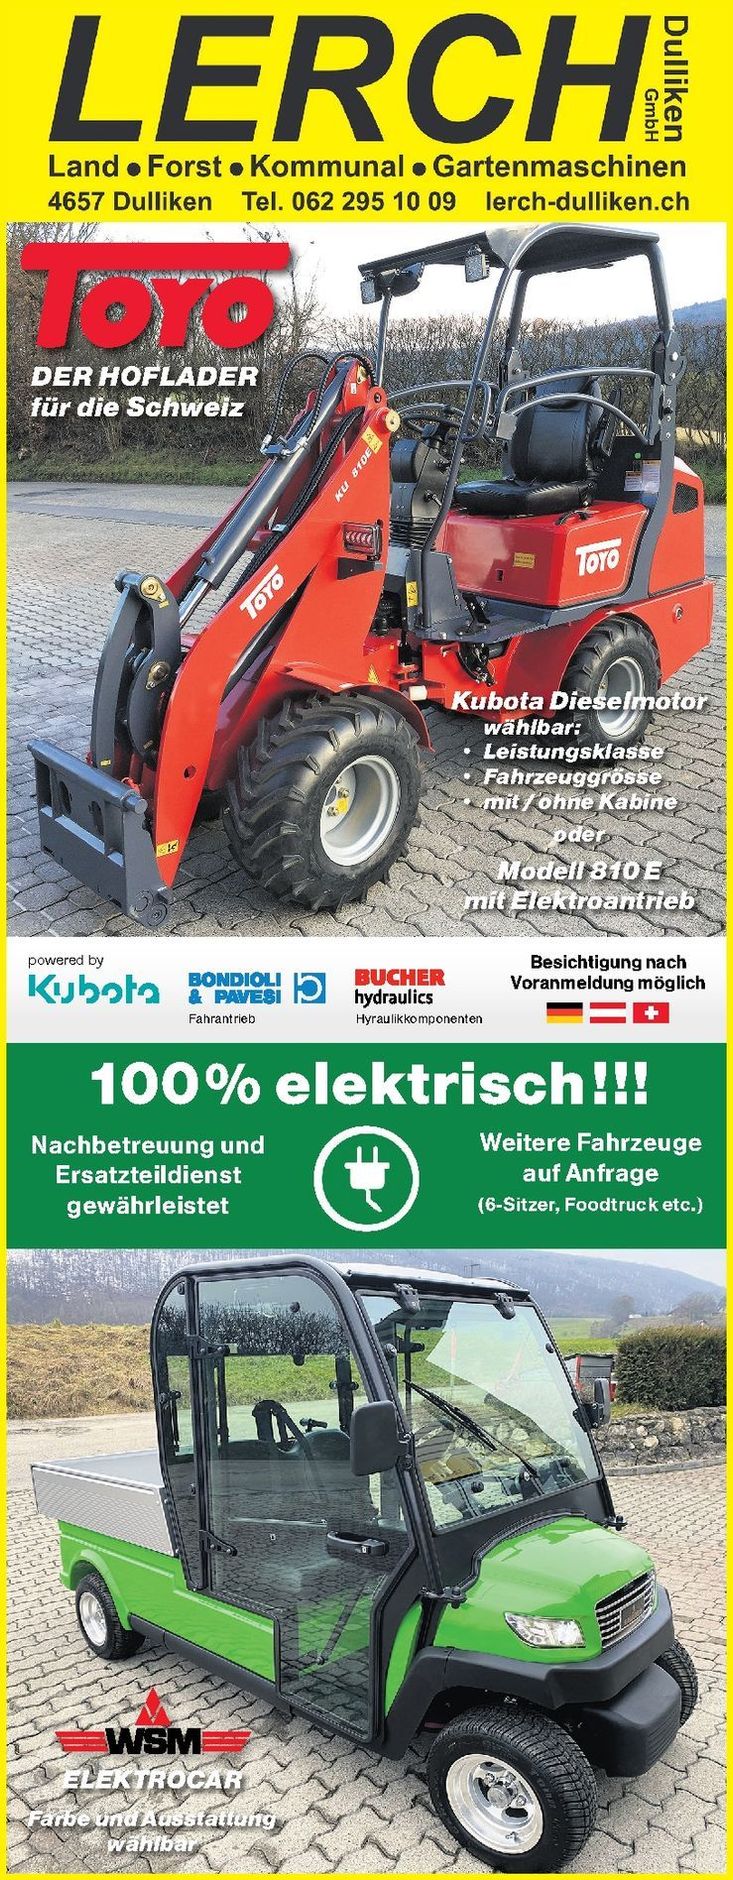 Lerch Dulliken GmbH